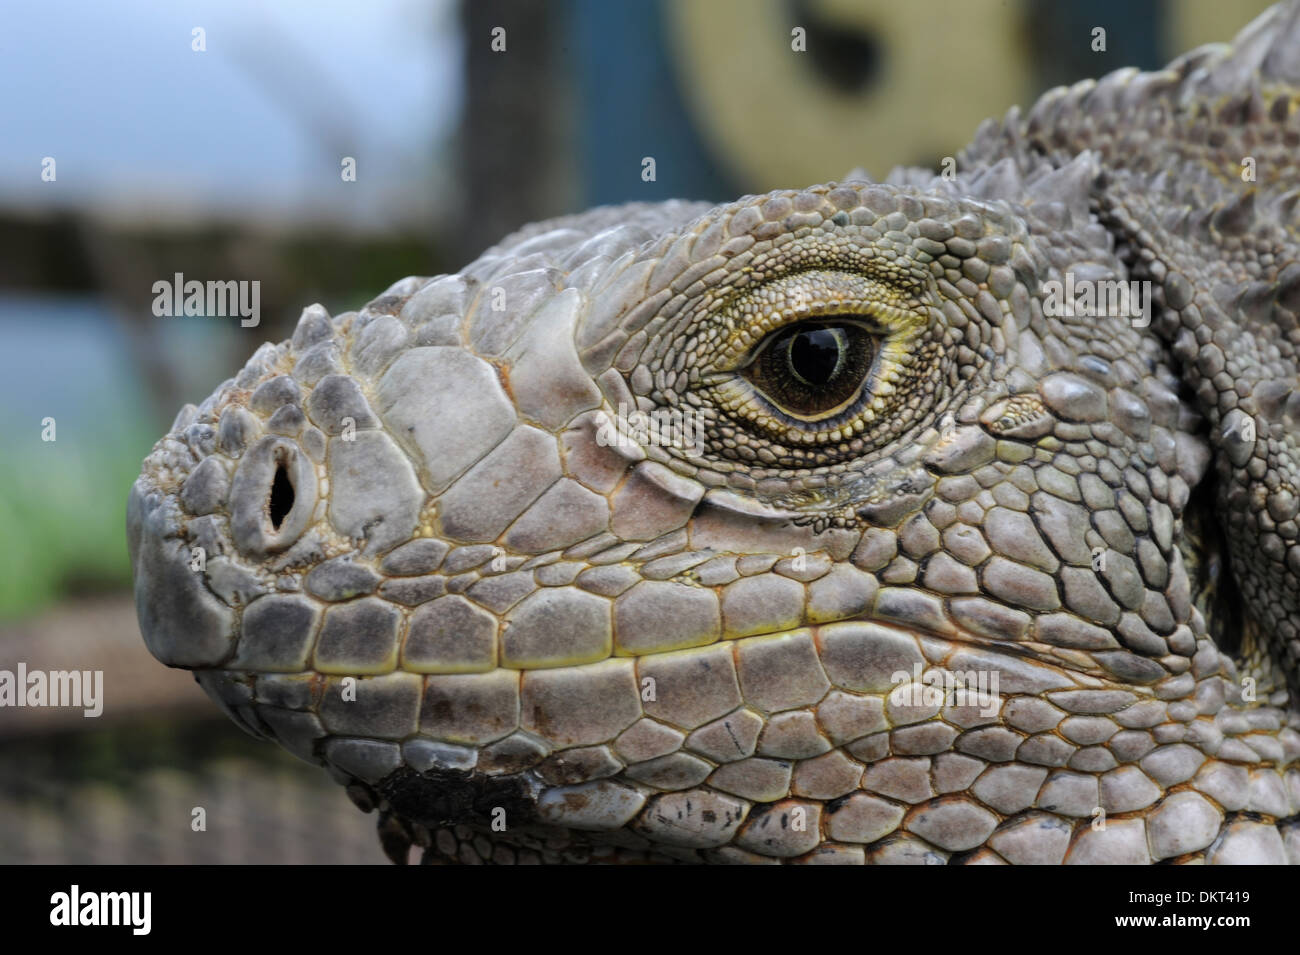 Asia, Indonesia, Bali, Leguan, iguana, reptile, head, eyes, scales, sheds, animal, Stock Photo